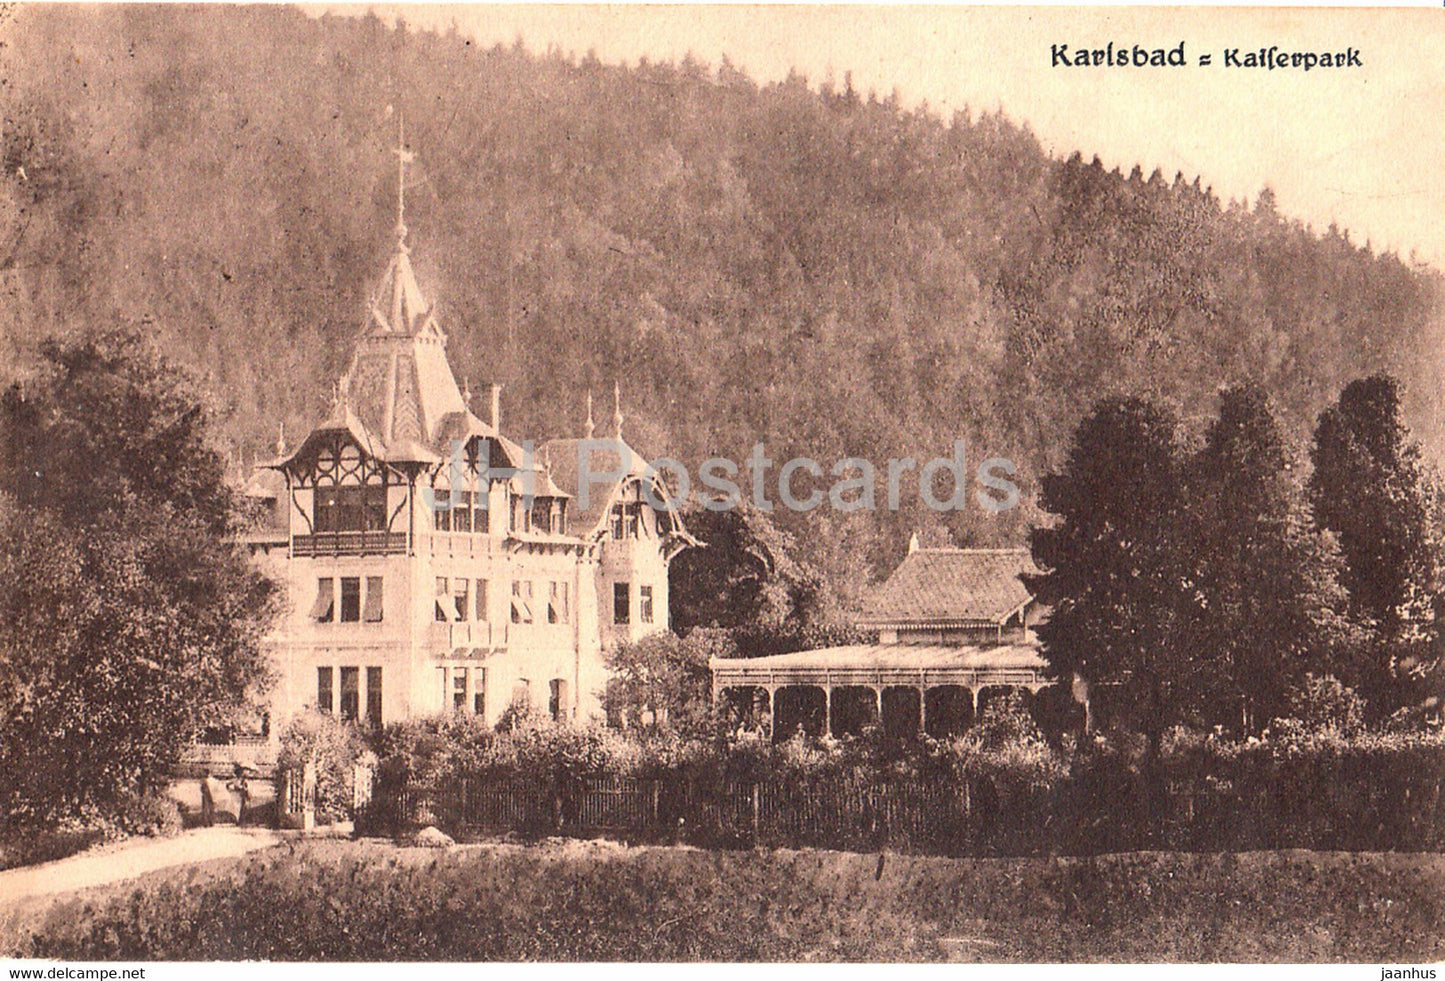 Karlovy Vary - Karlsbad - Kaiserpark - old postcard - Czechoslovakia - Czech Republic - used - JH Postcards